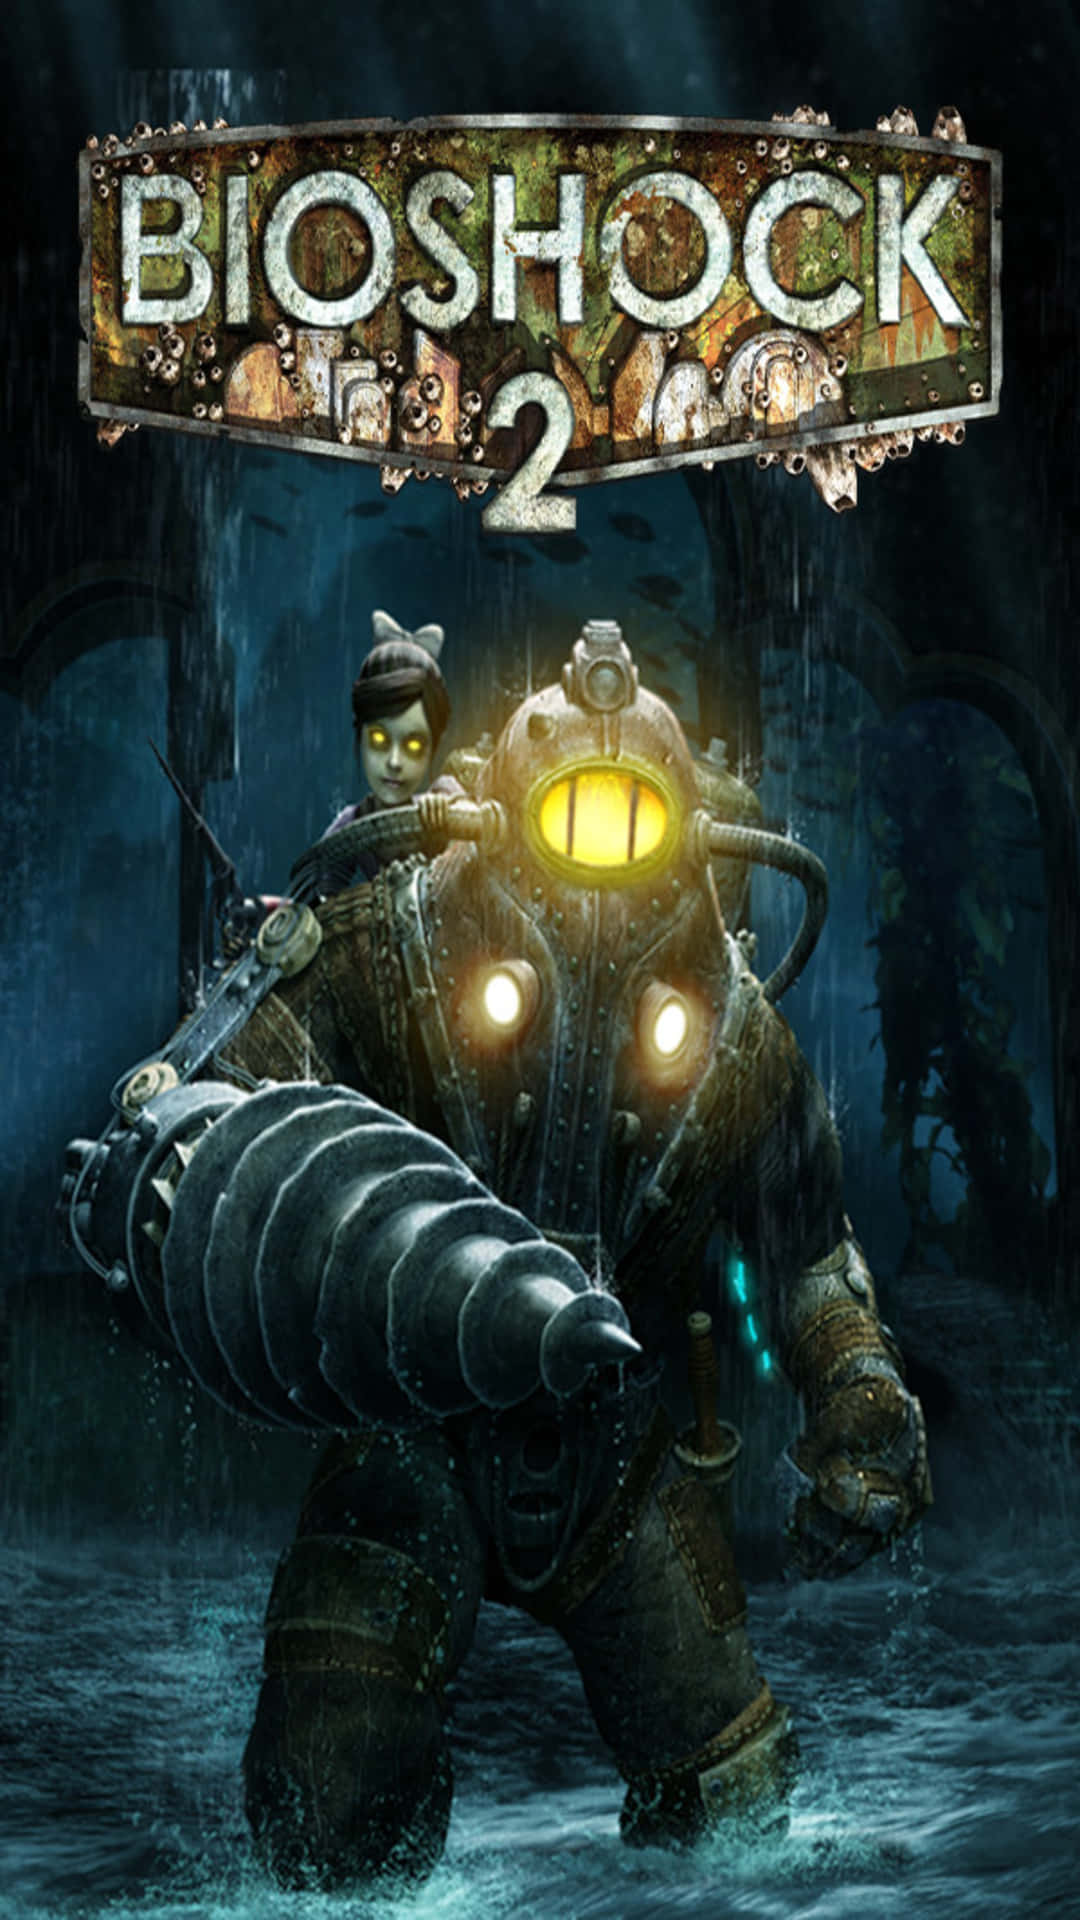 Android Bioshock Infinite baggrund Bioshock 2 Spil Plakat